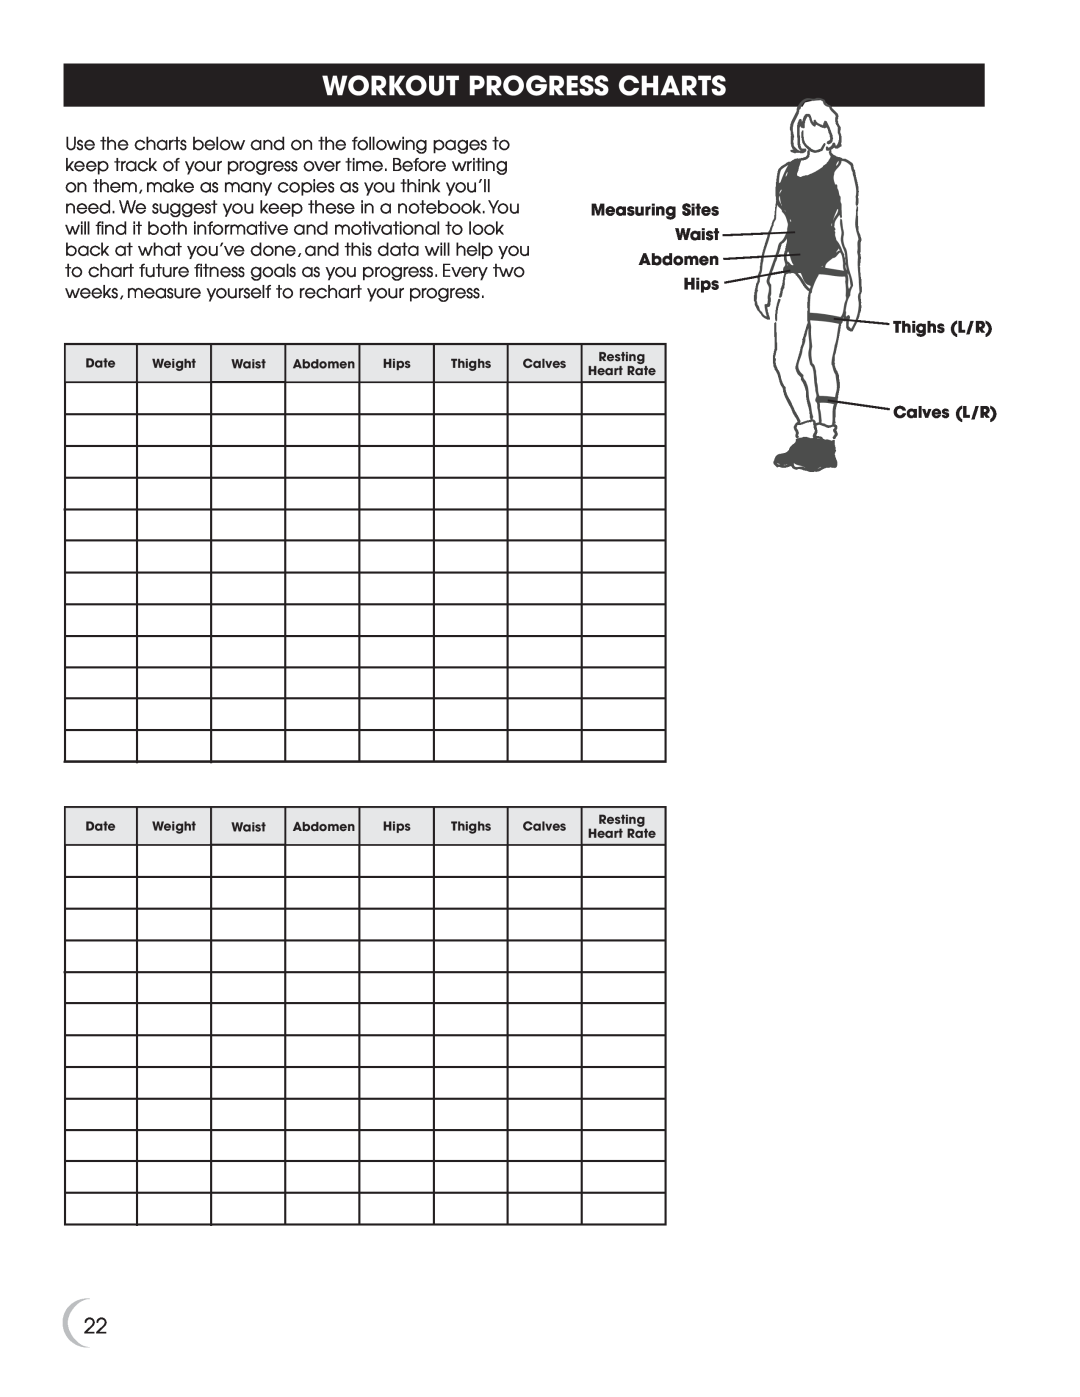 New Balance 5K 5100 owner manual Workout Progress Charts, Measuring Sites Waist Abdomen Hips, Thighs L/R, Calves L/R 